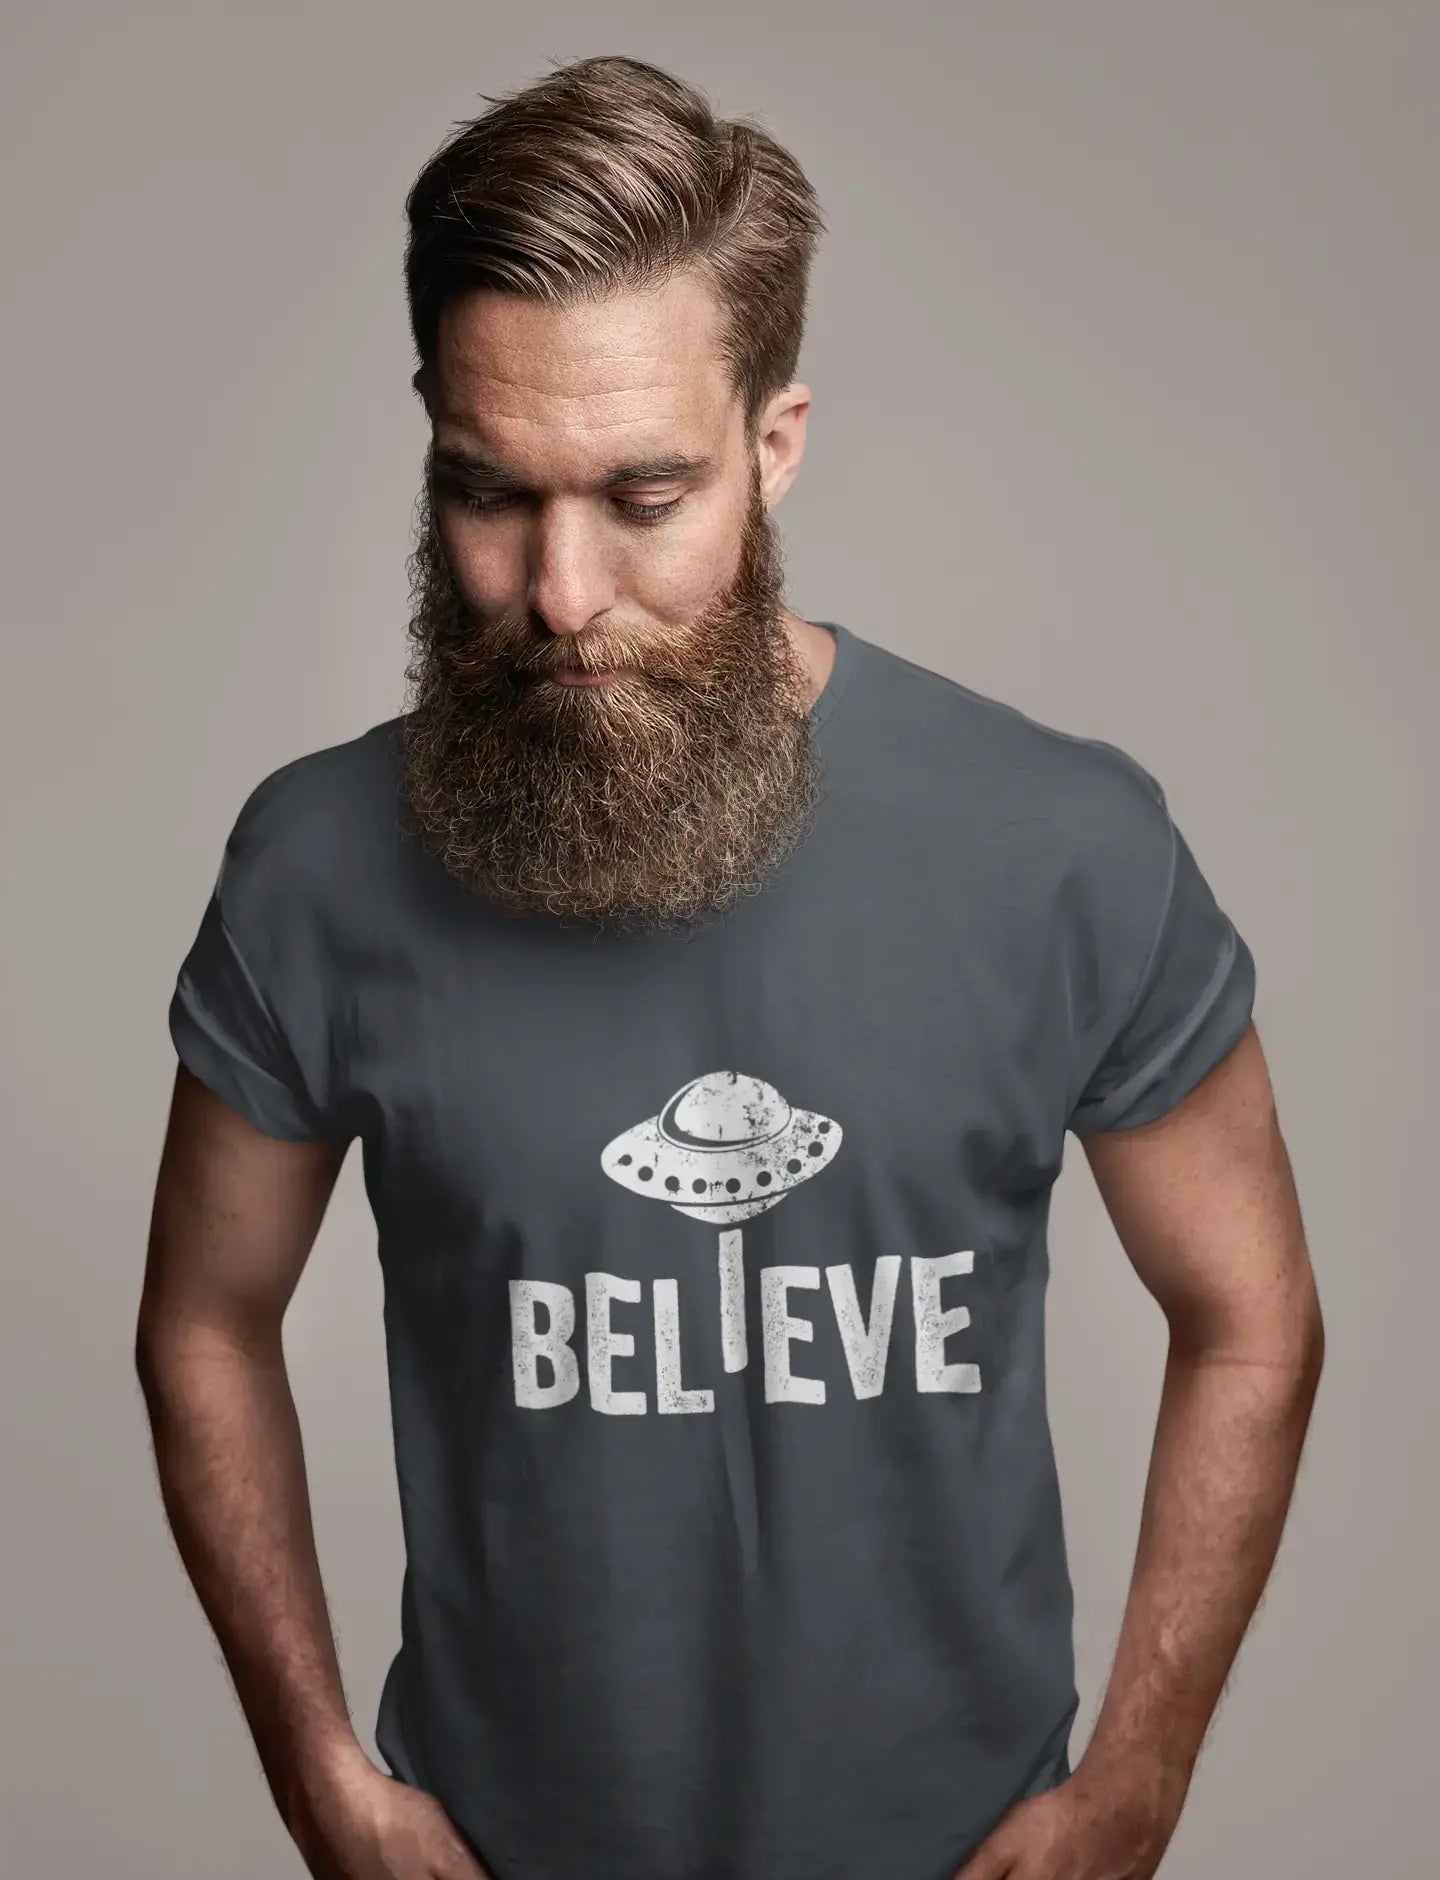 ULTRABASIC - Graphic Men's Believe UFO Alien T-Shirt Funny Casual Letter Print Tee White